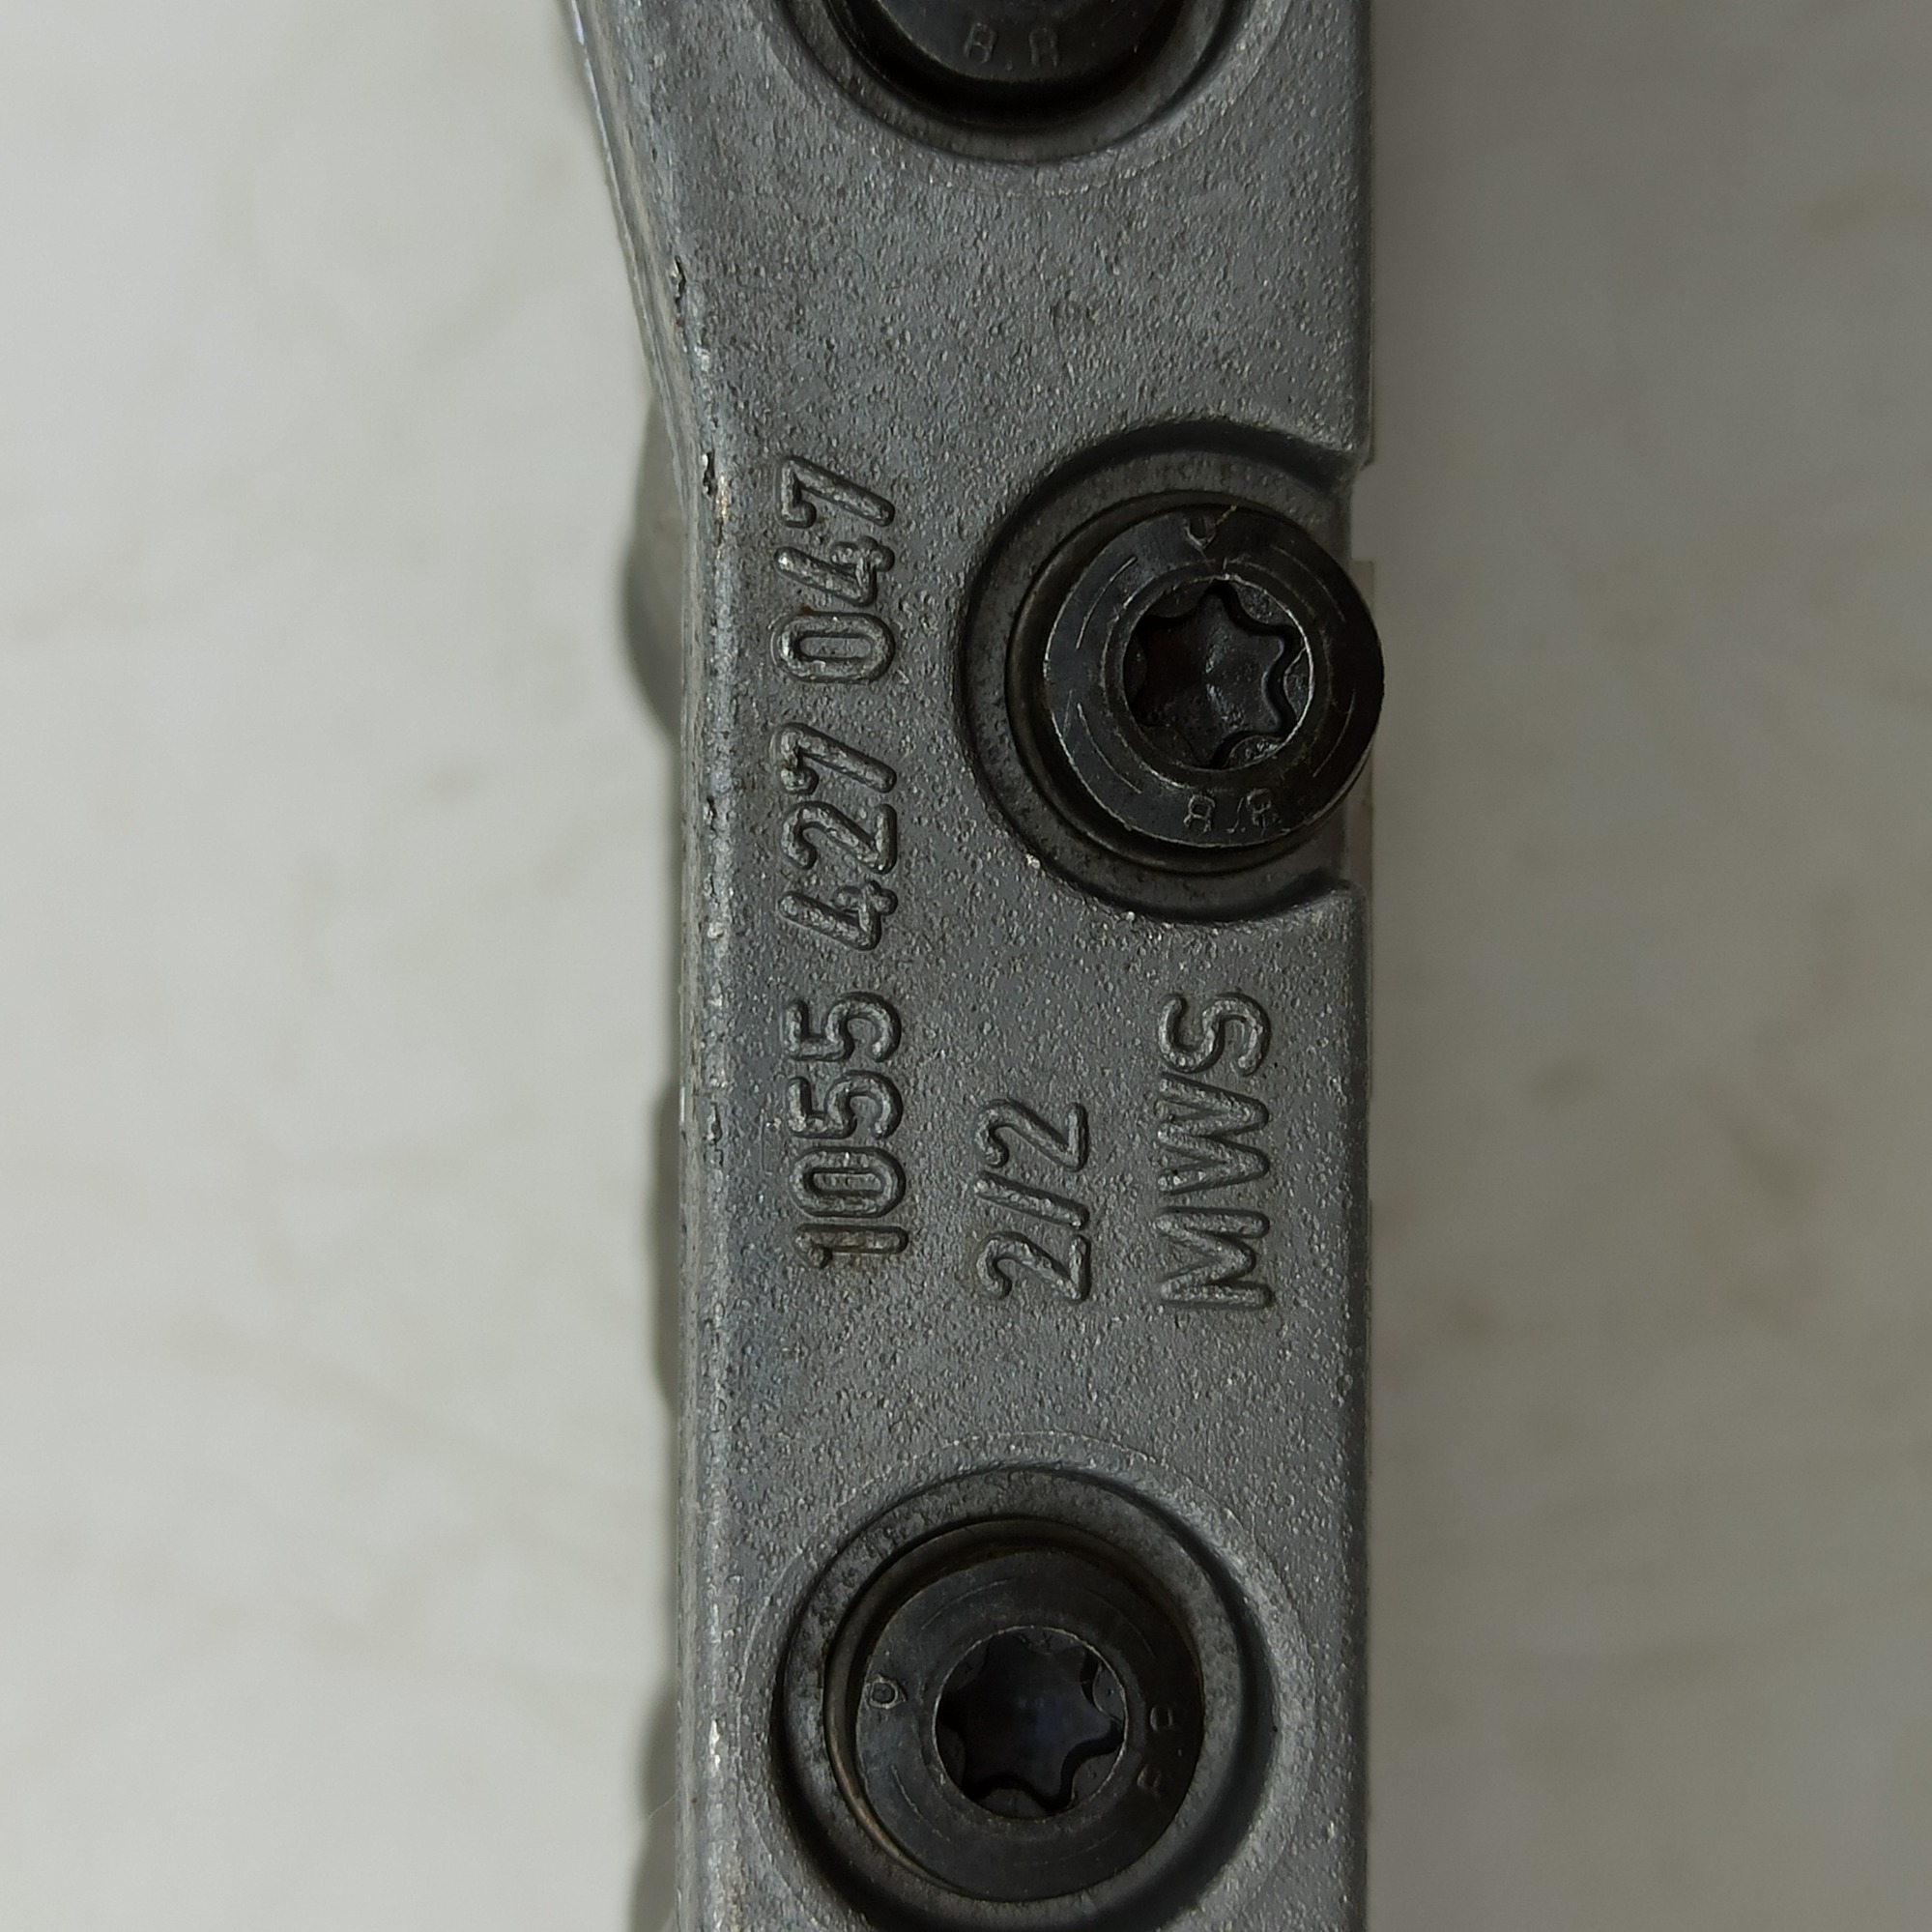 5HP24 Automatic Transmission valve body (BMW, Jaguar & Land Rover) Transmission Code: 1058 427 068